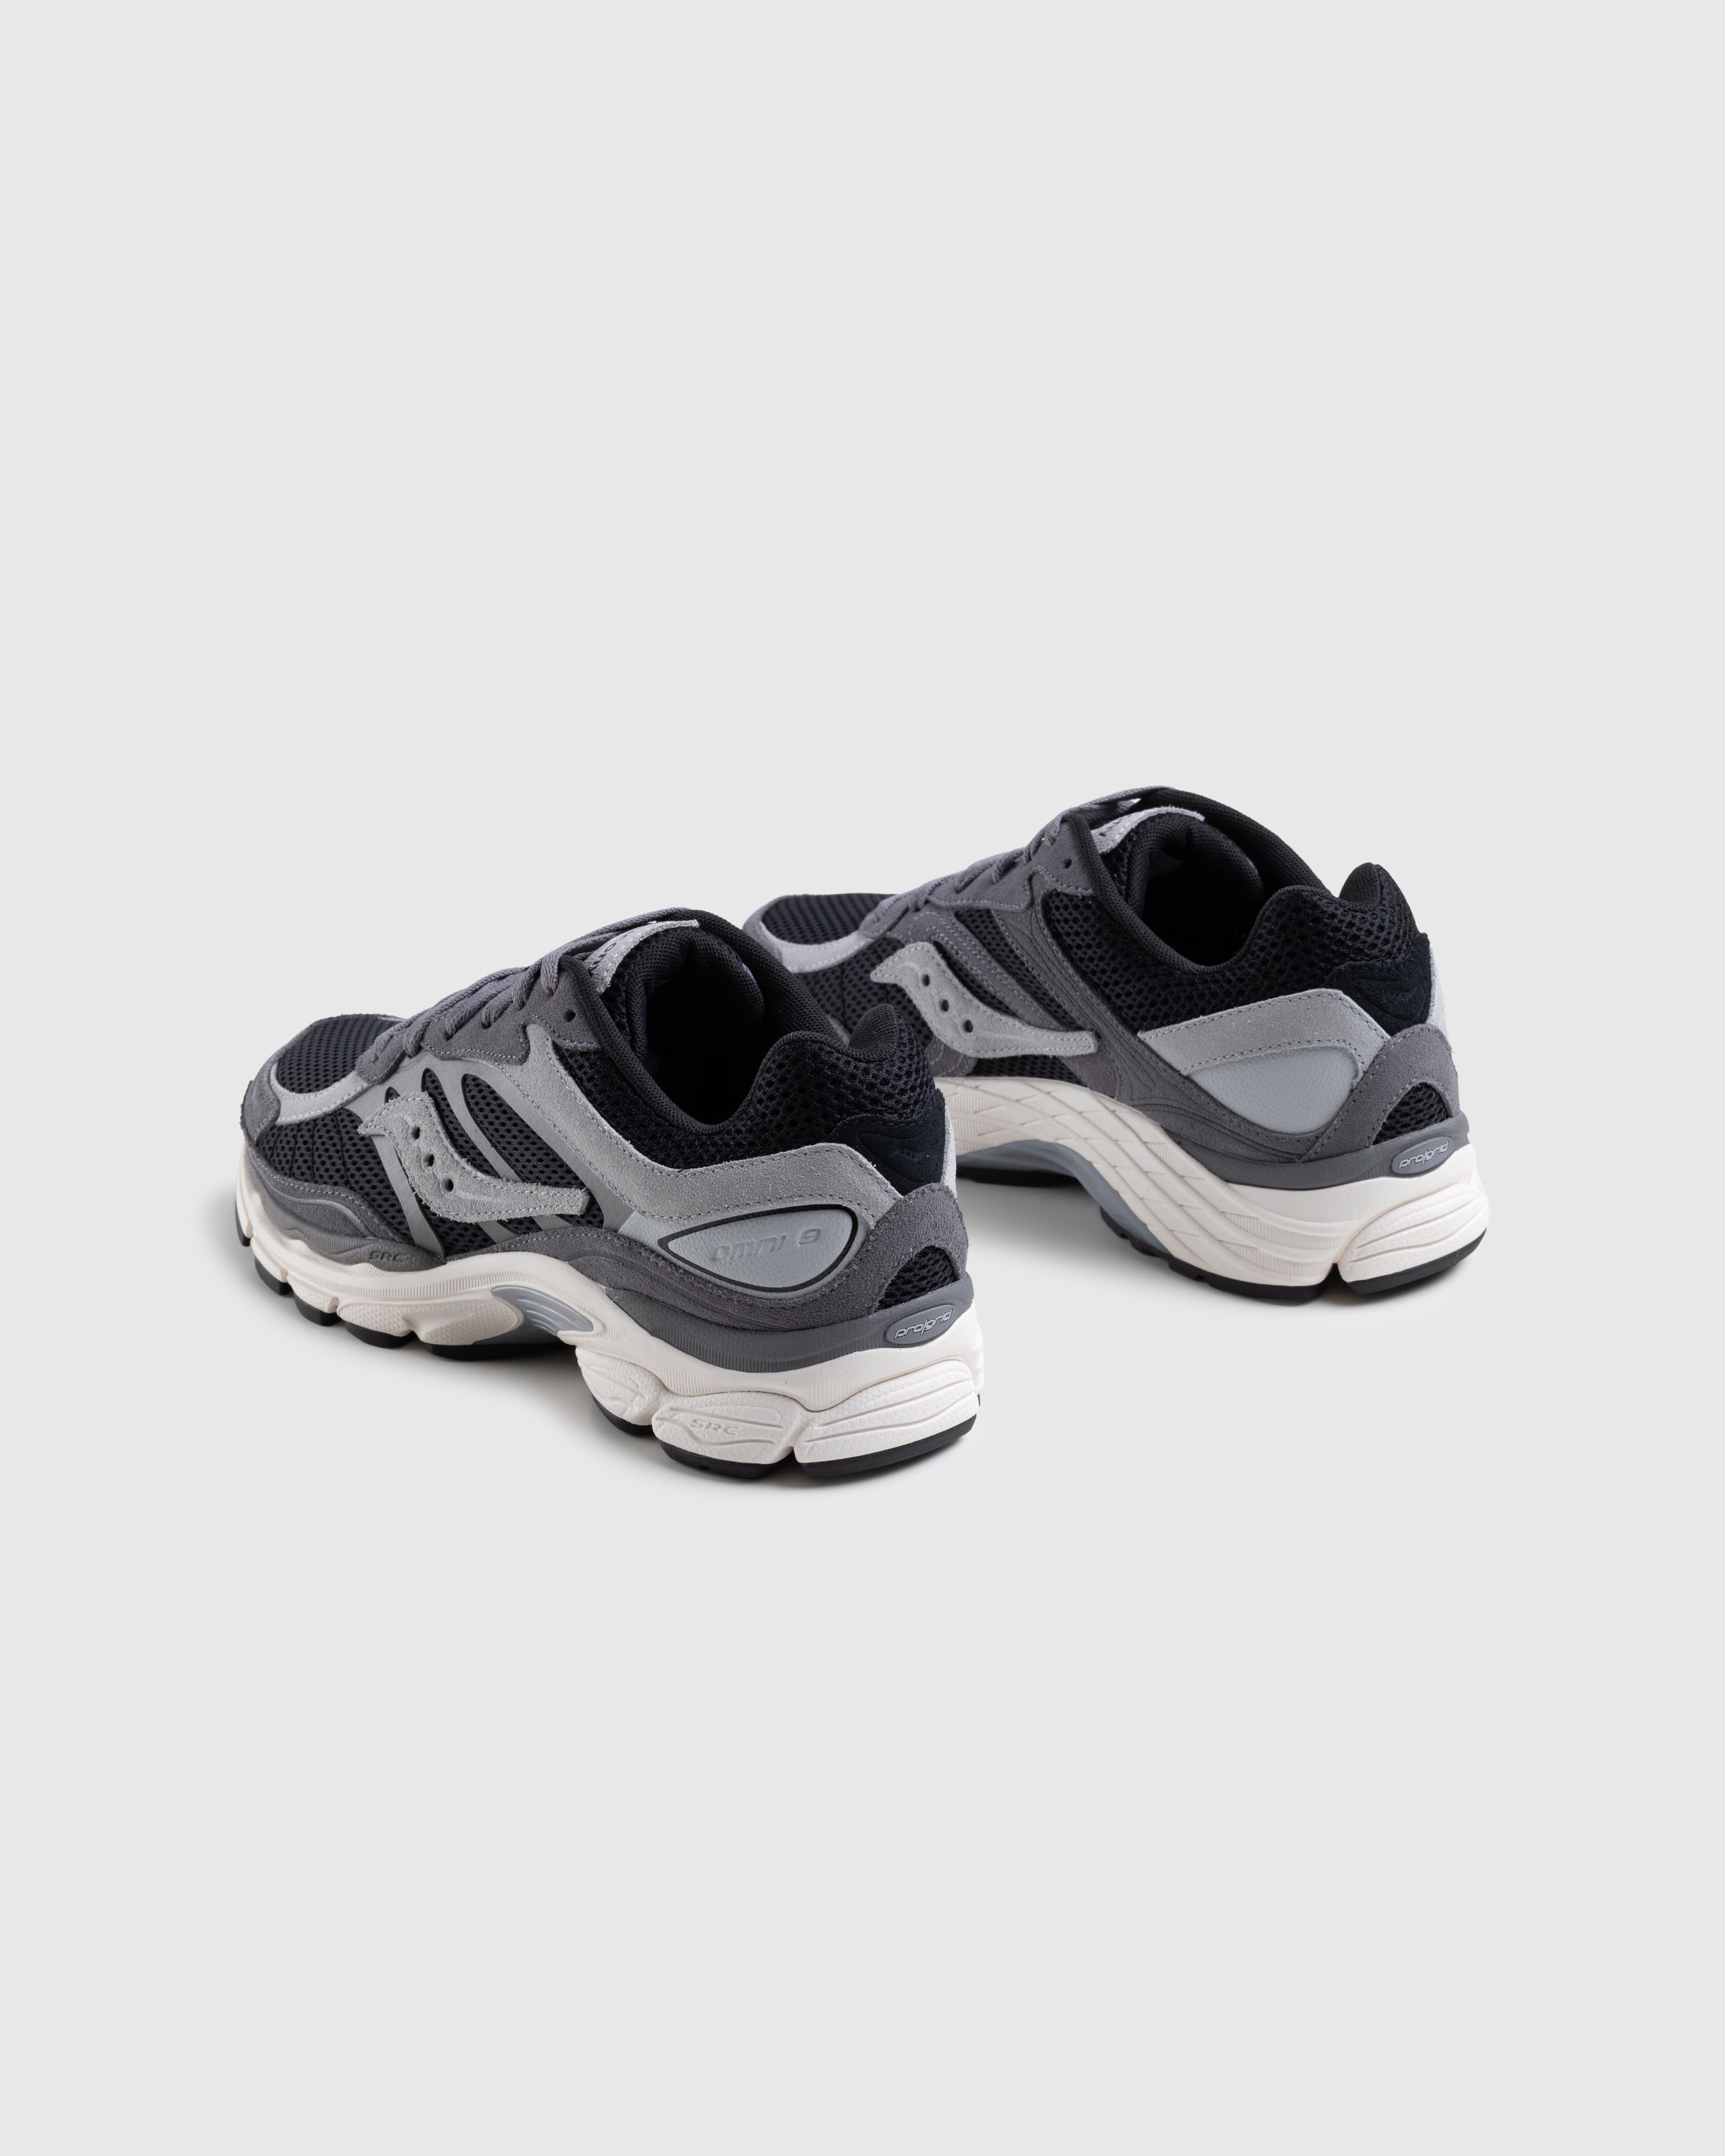 Saucony - ProGrid Omni 9 Premium Gray/Black - Footwear - Grey - Image 4